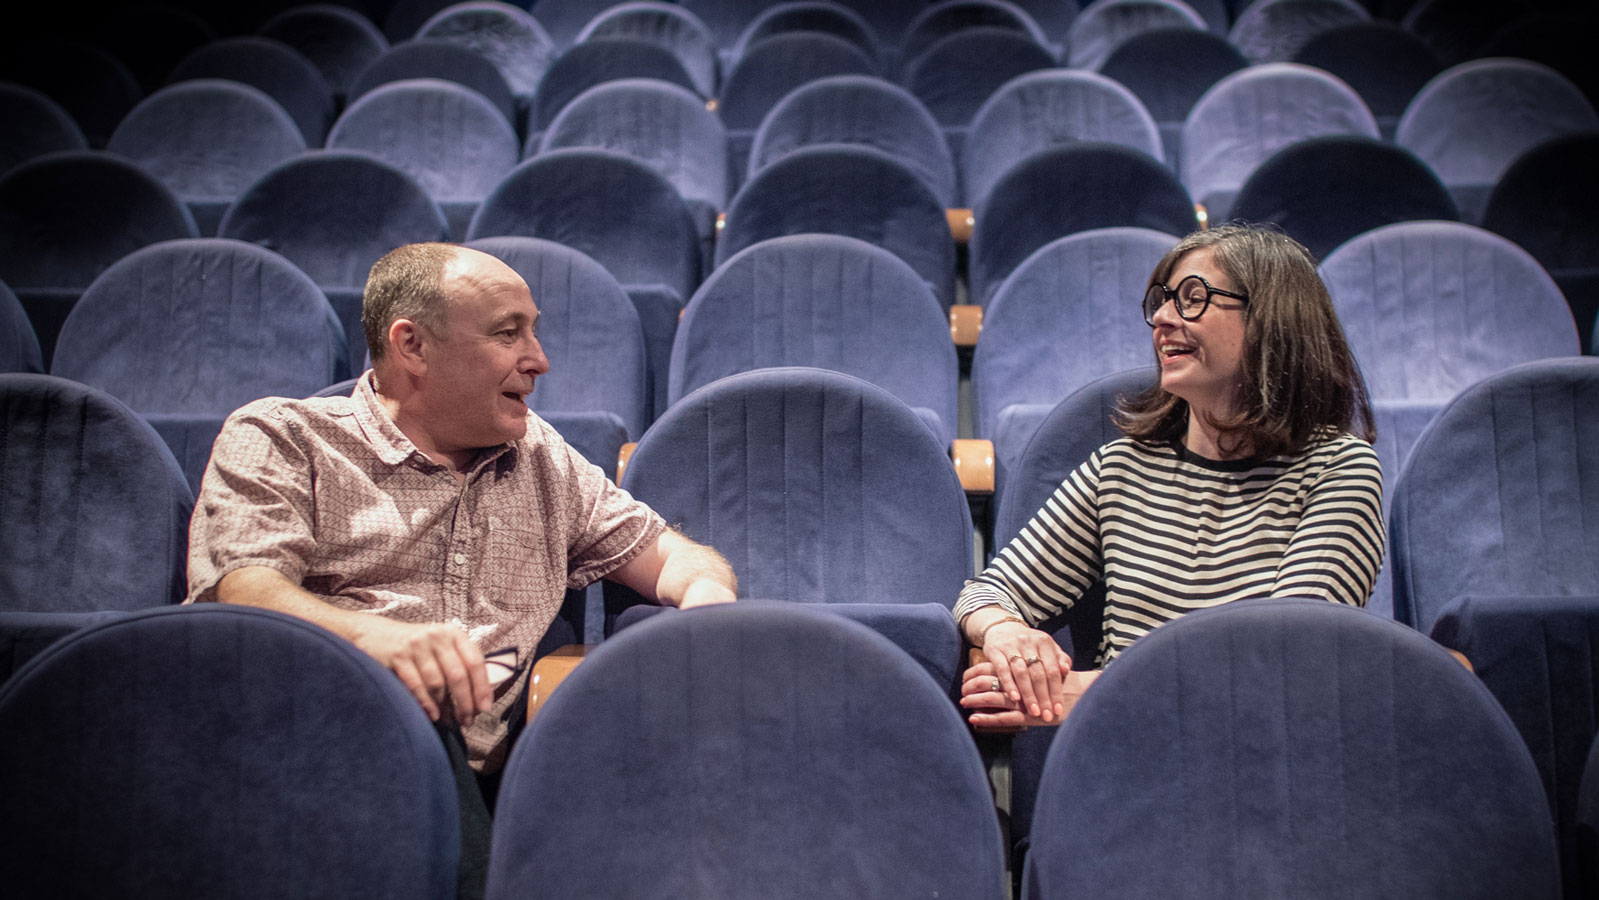 Photo of Mark Cosgrove and Tara Judah sitting in a cinema at Watershed